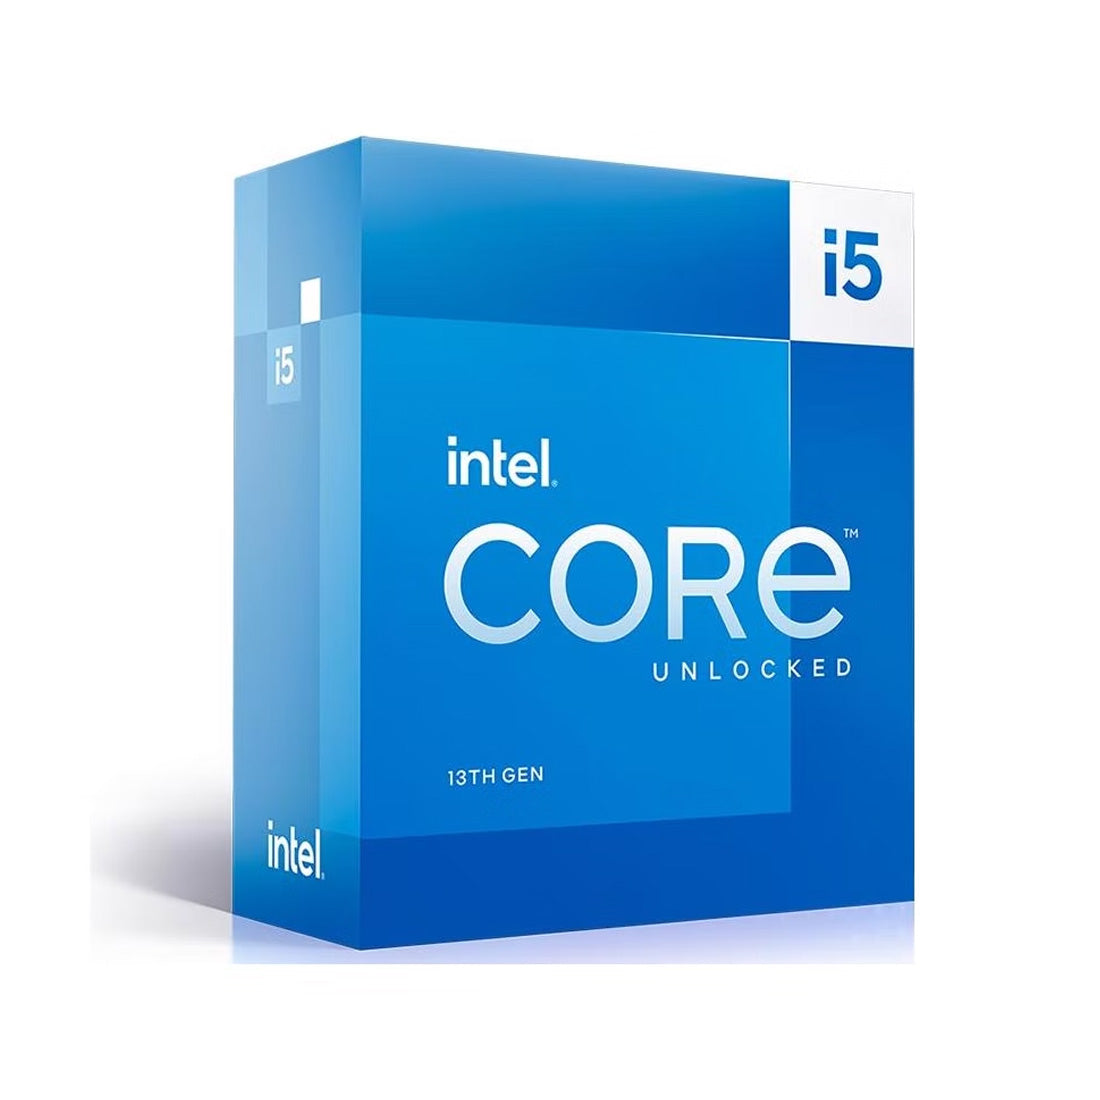 Intel Core 13th Gen i5-13600K LGA1700 अनलॉक डेस्कटॉप प्रोसेसर 14 कोर 5.1GHz 24MB कैश तक